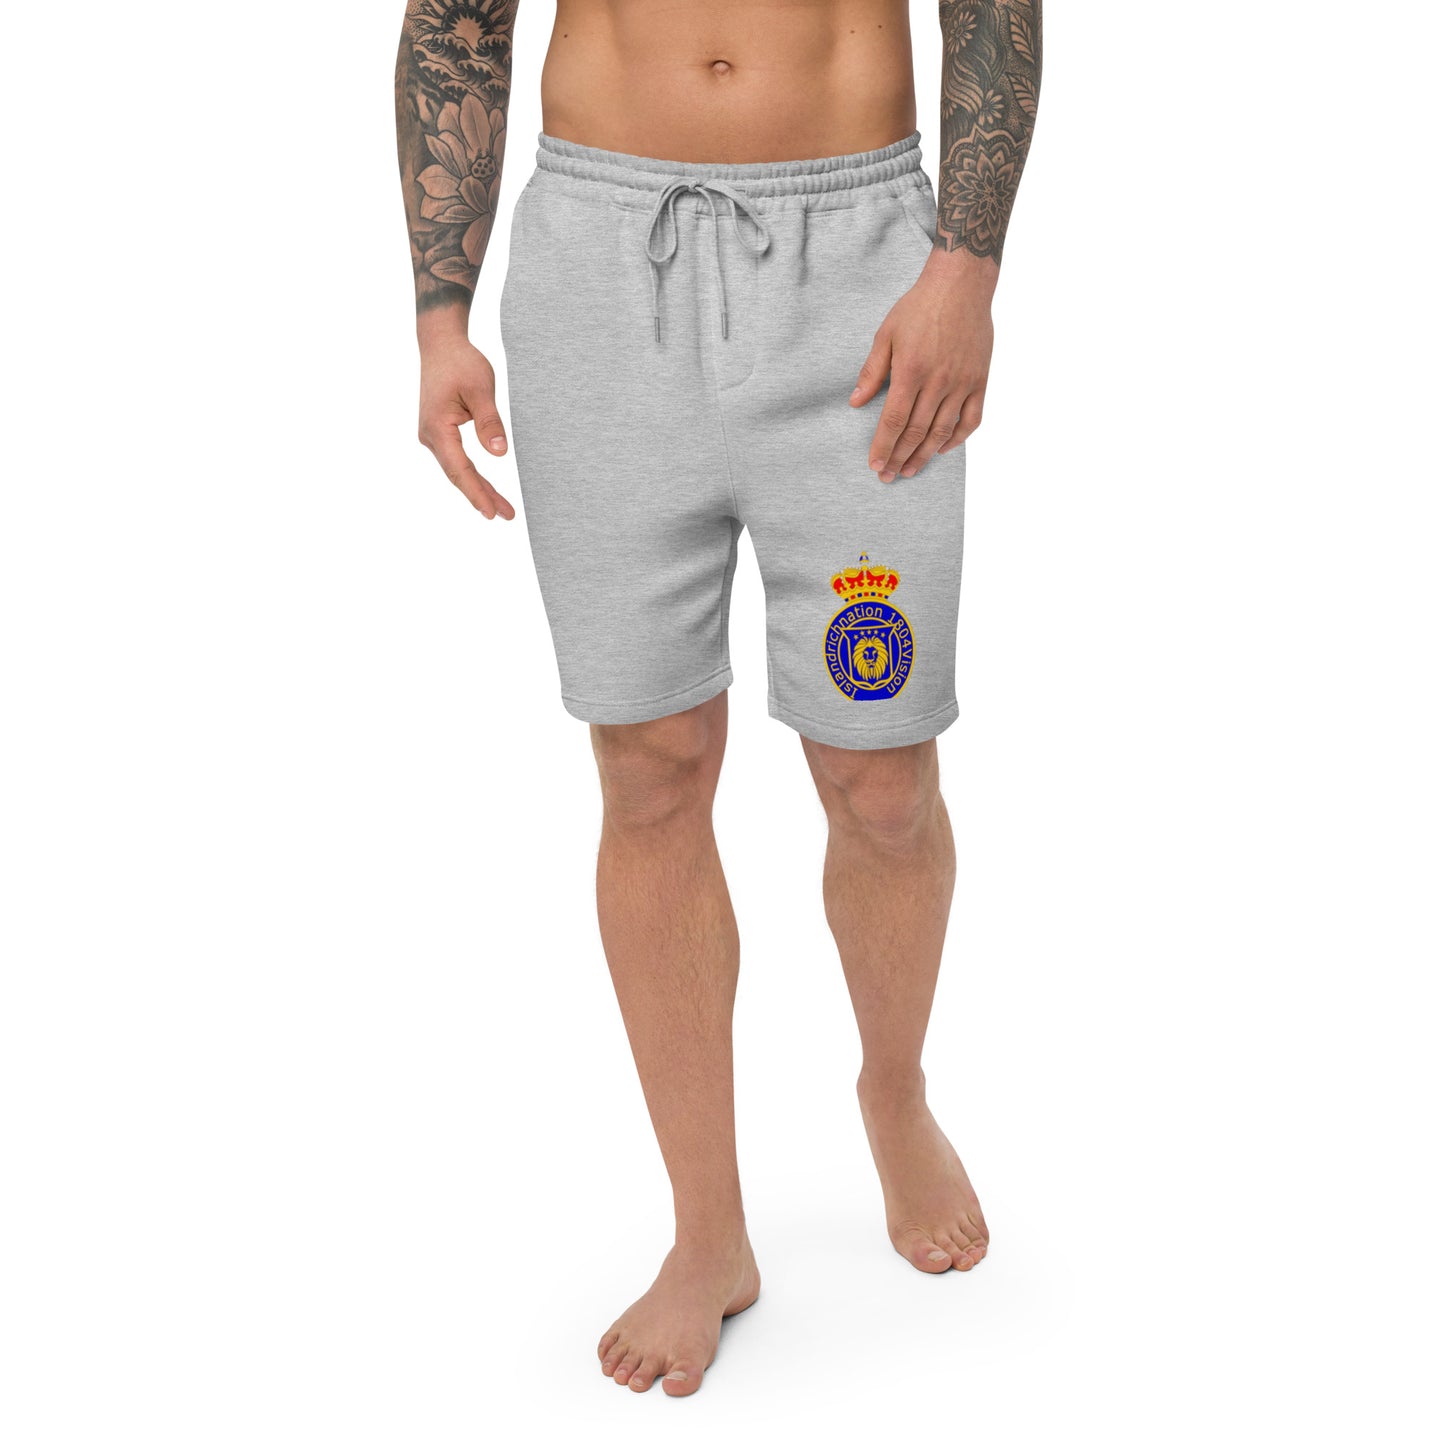 Men's fleece islandrich shorts